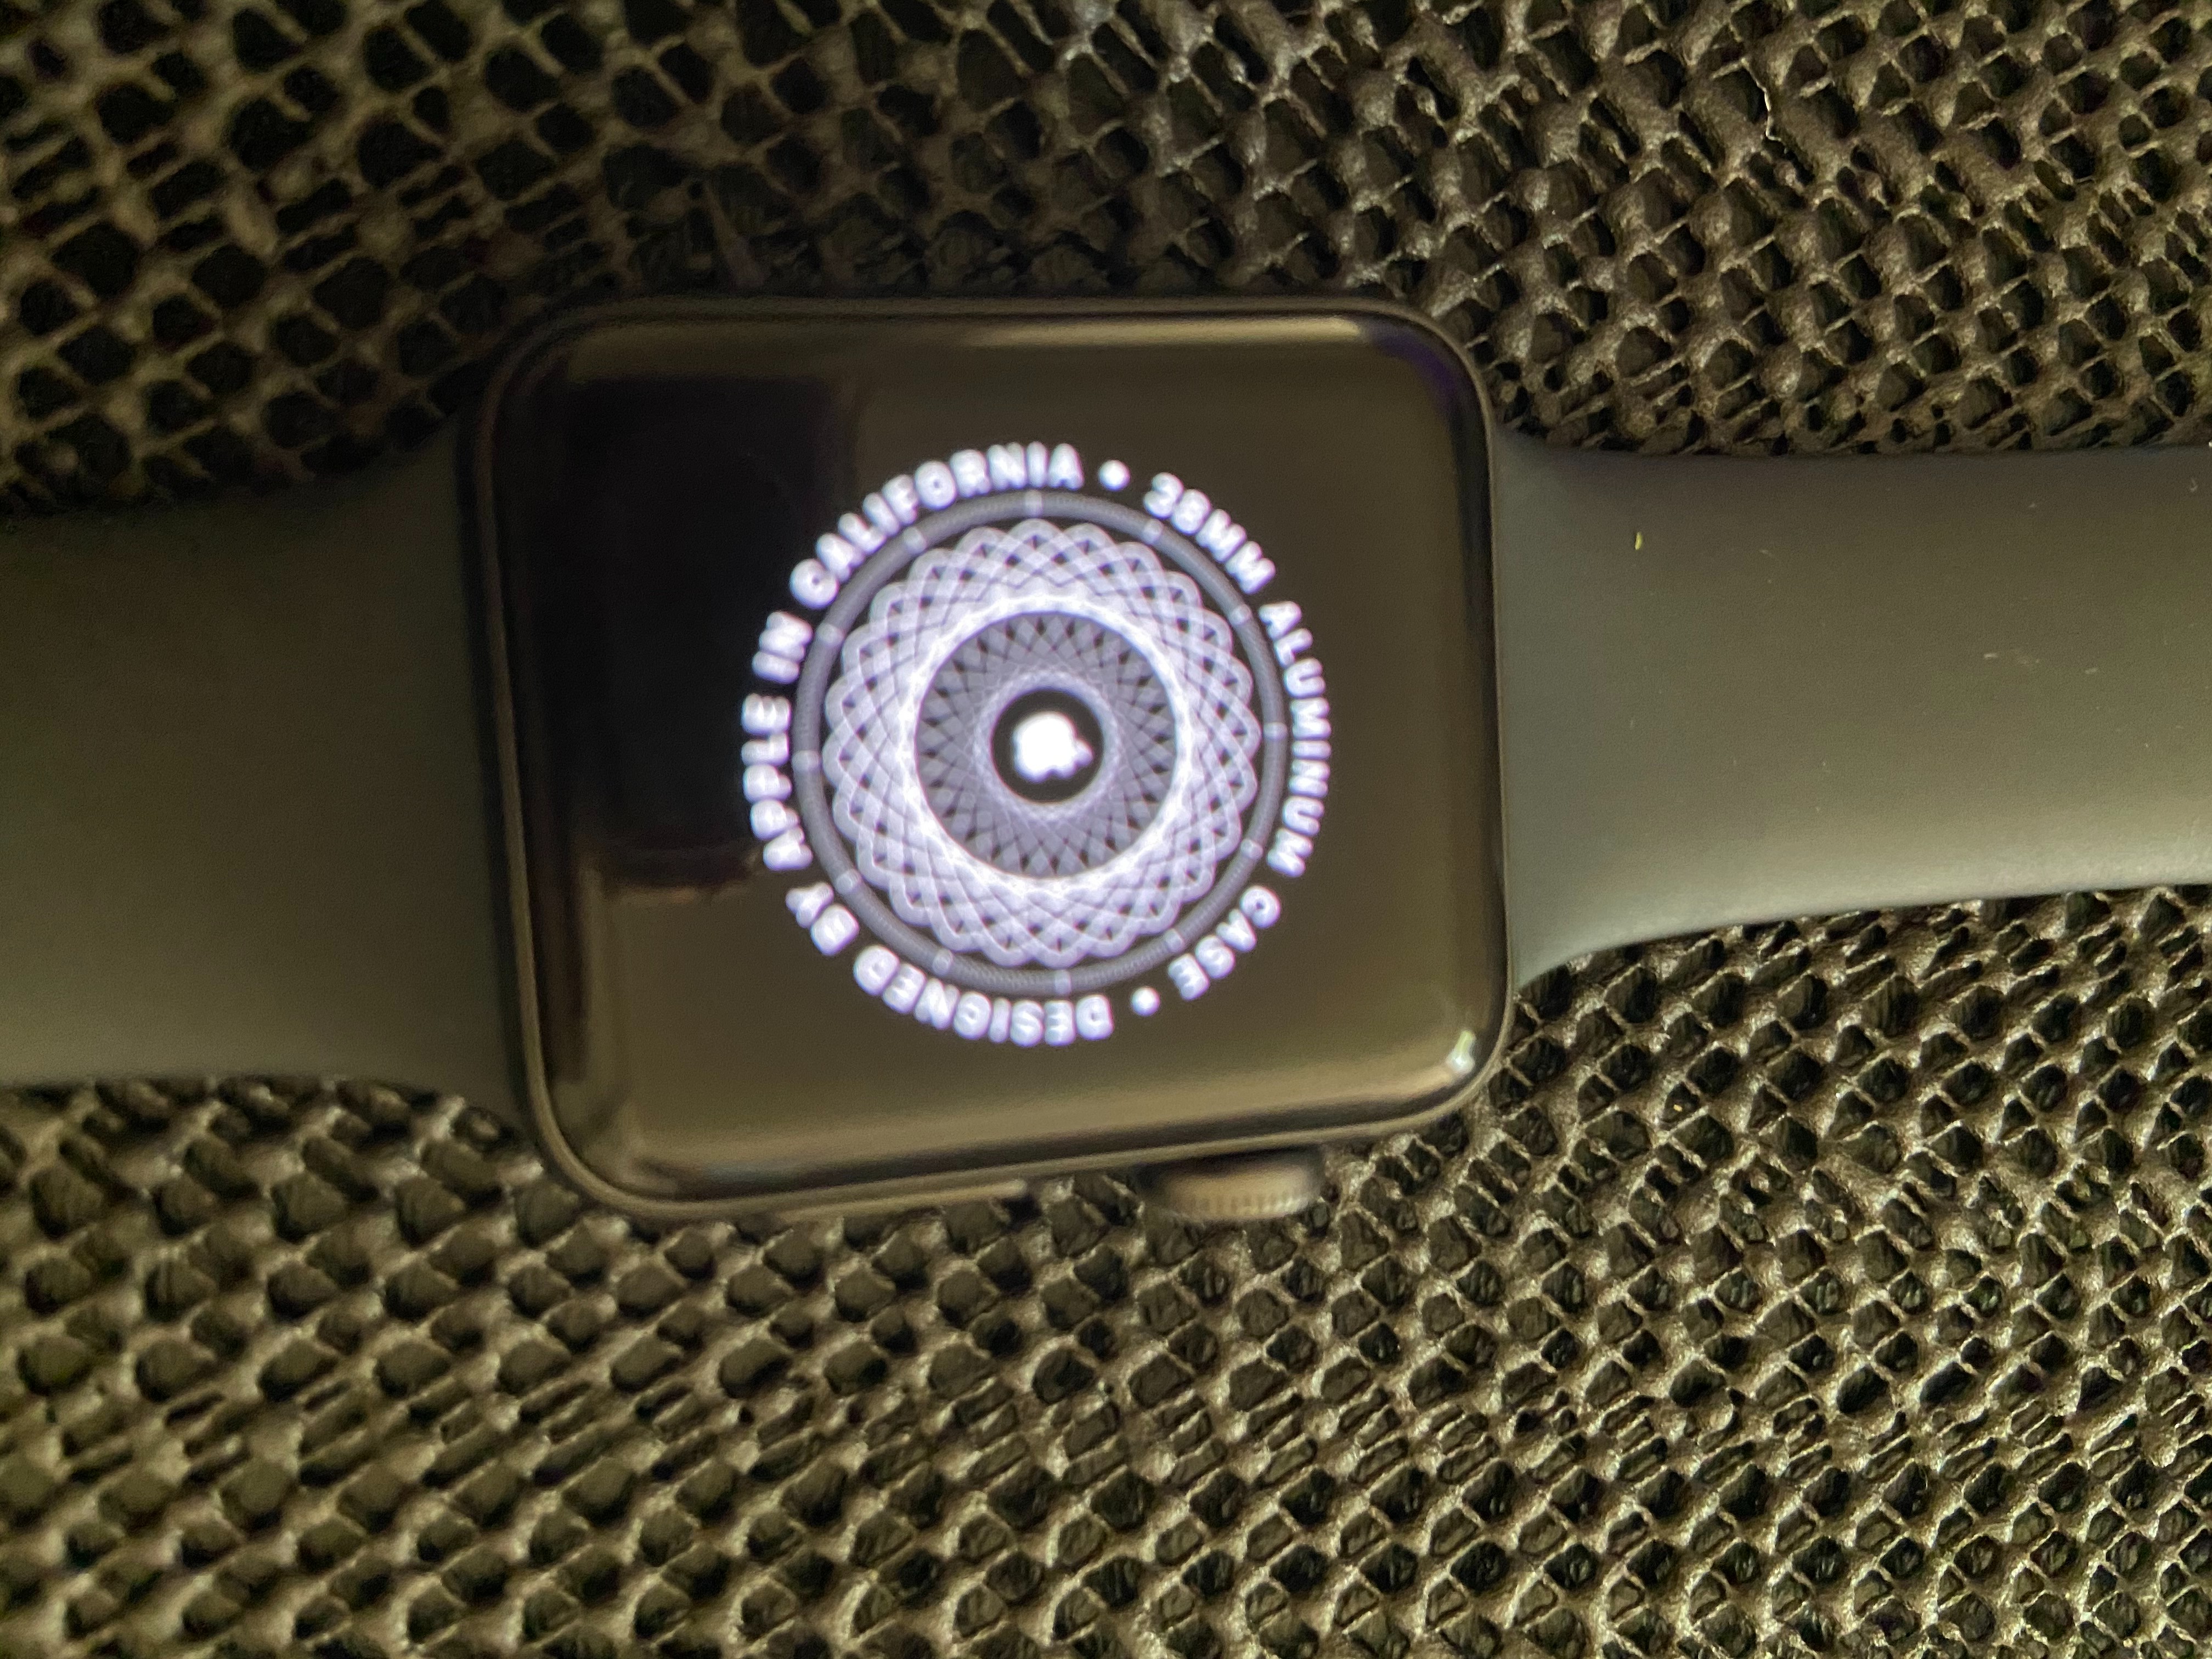 updating apple watch